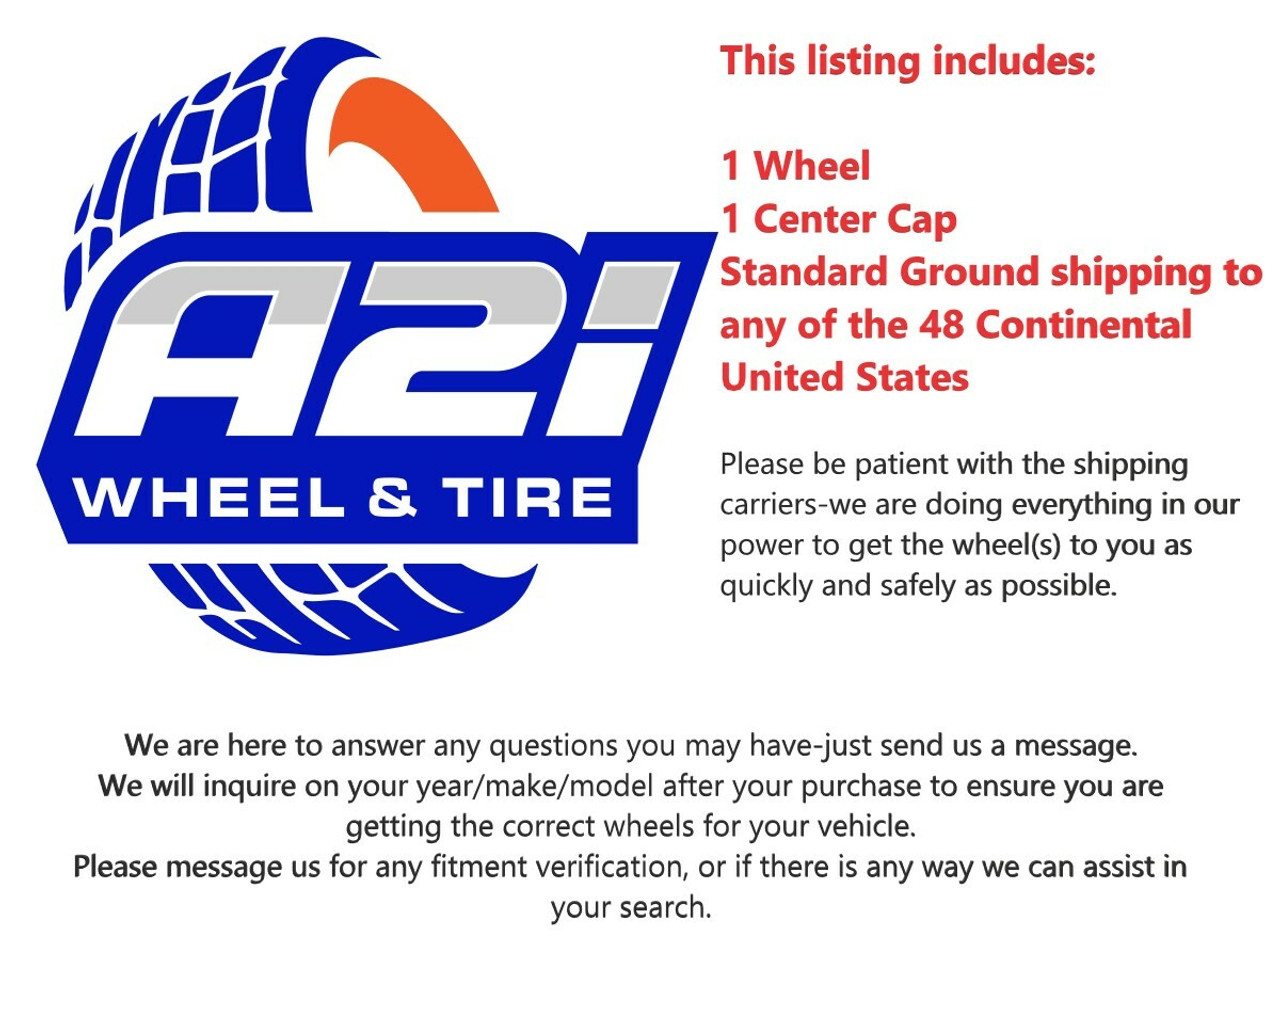 24" Axe Wheels Sembrado Fully Polished 24x9 Wheel 5x5 25mm For Jeep Wrangler Rim